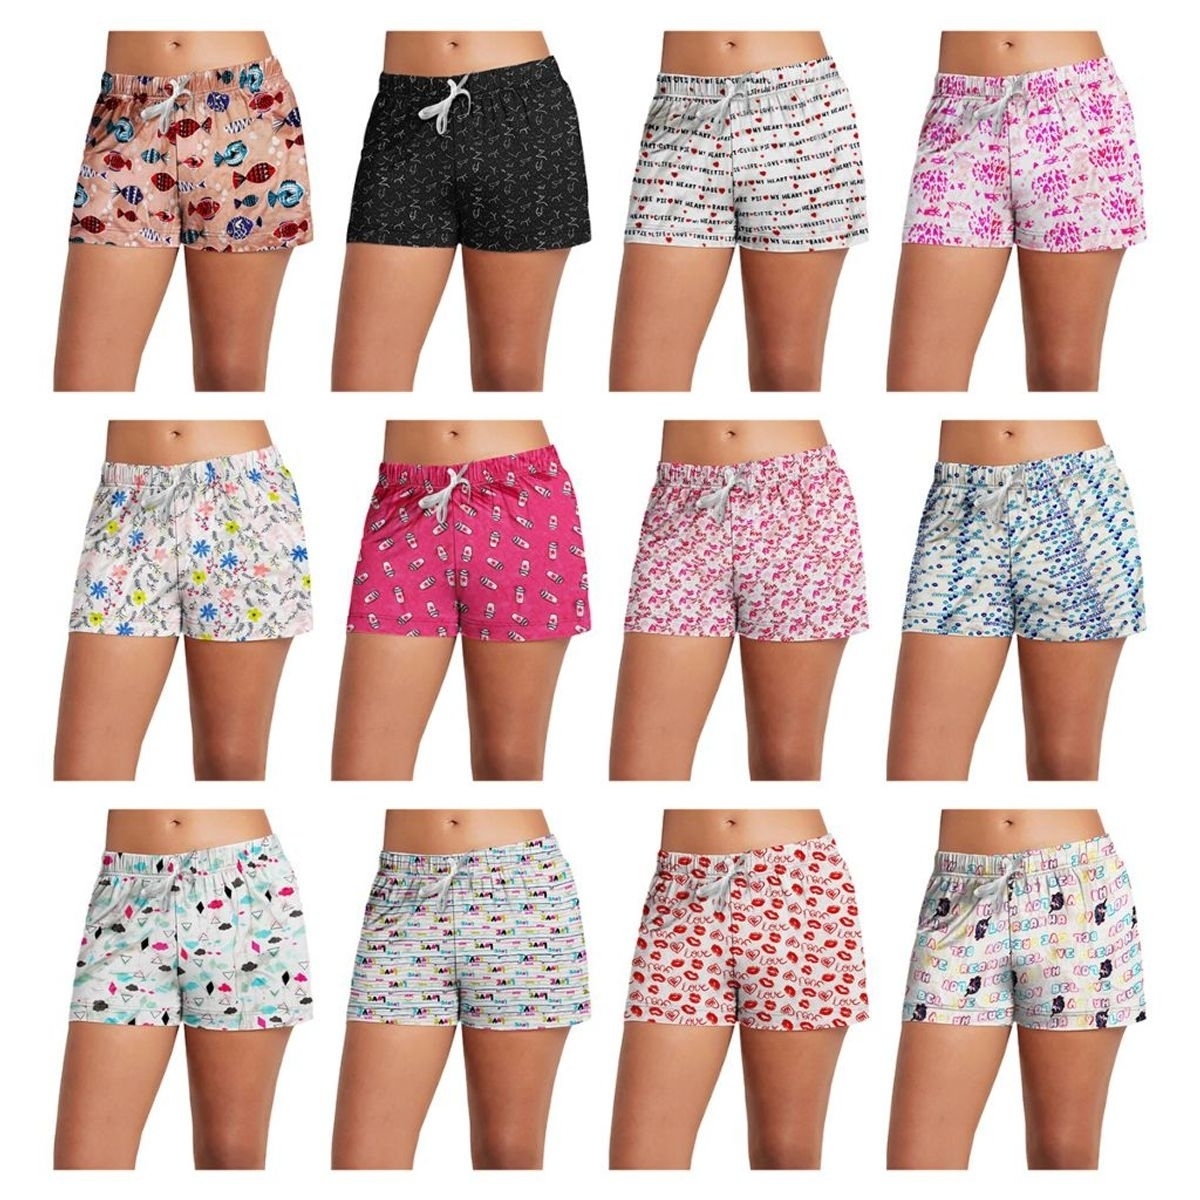 6-Pack: Women's Super-Soft Lightweight Fun Printed Comfy Lounge Bottom Pajama Shorts W/ Drawstring - Medium, Shapes